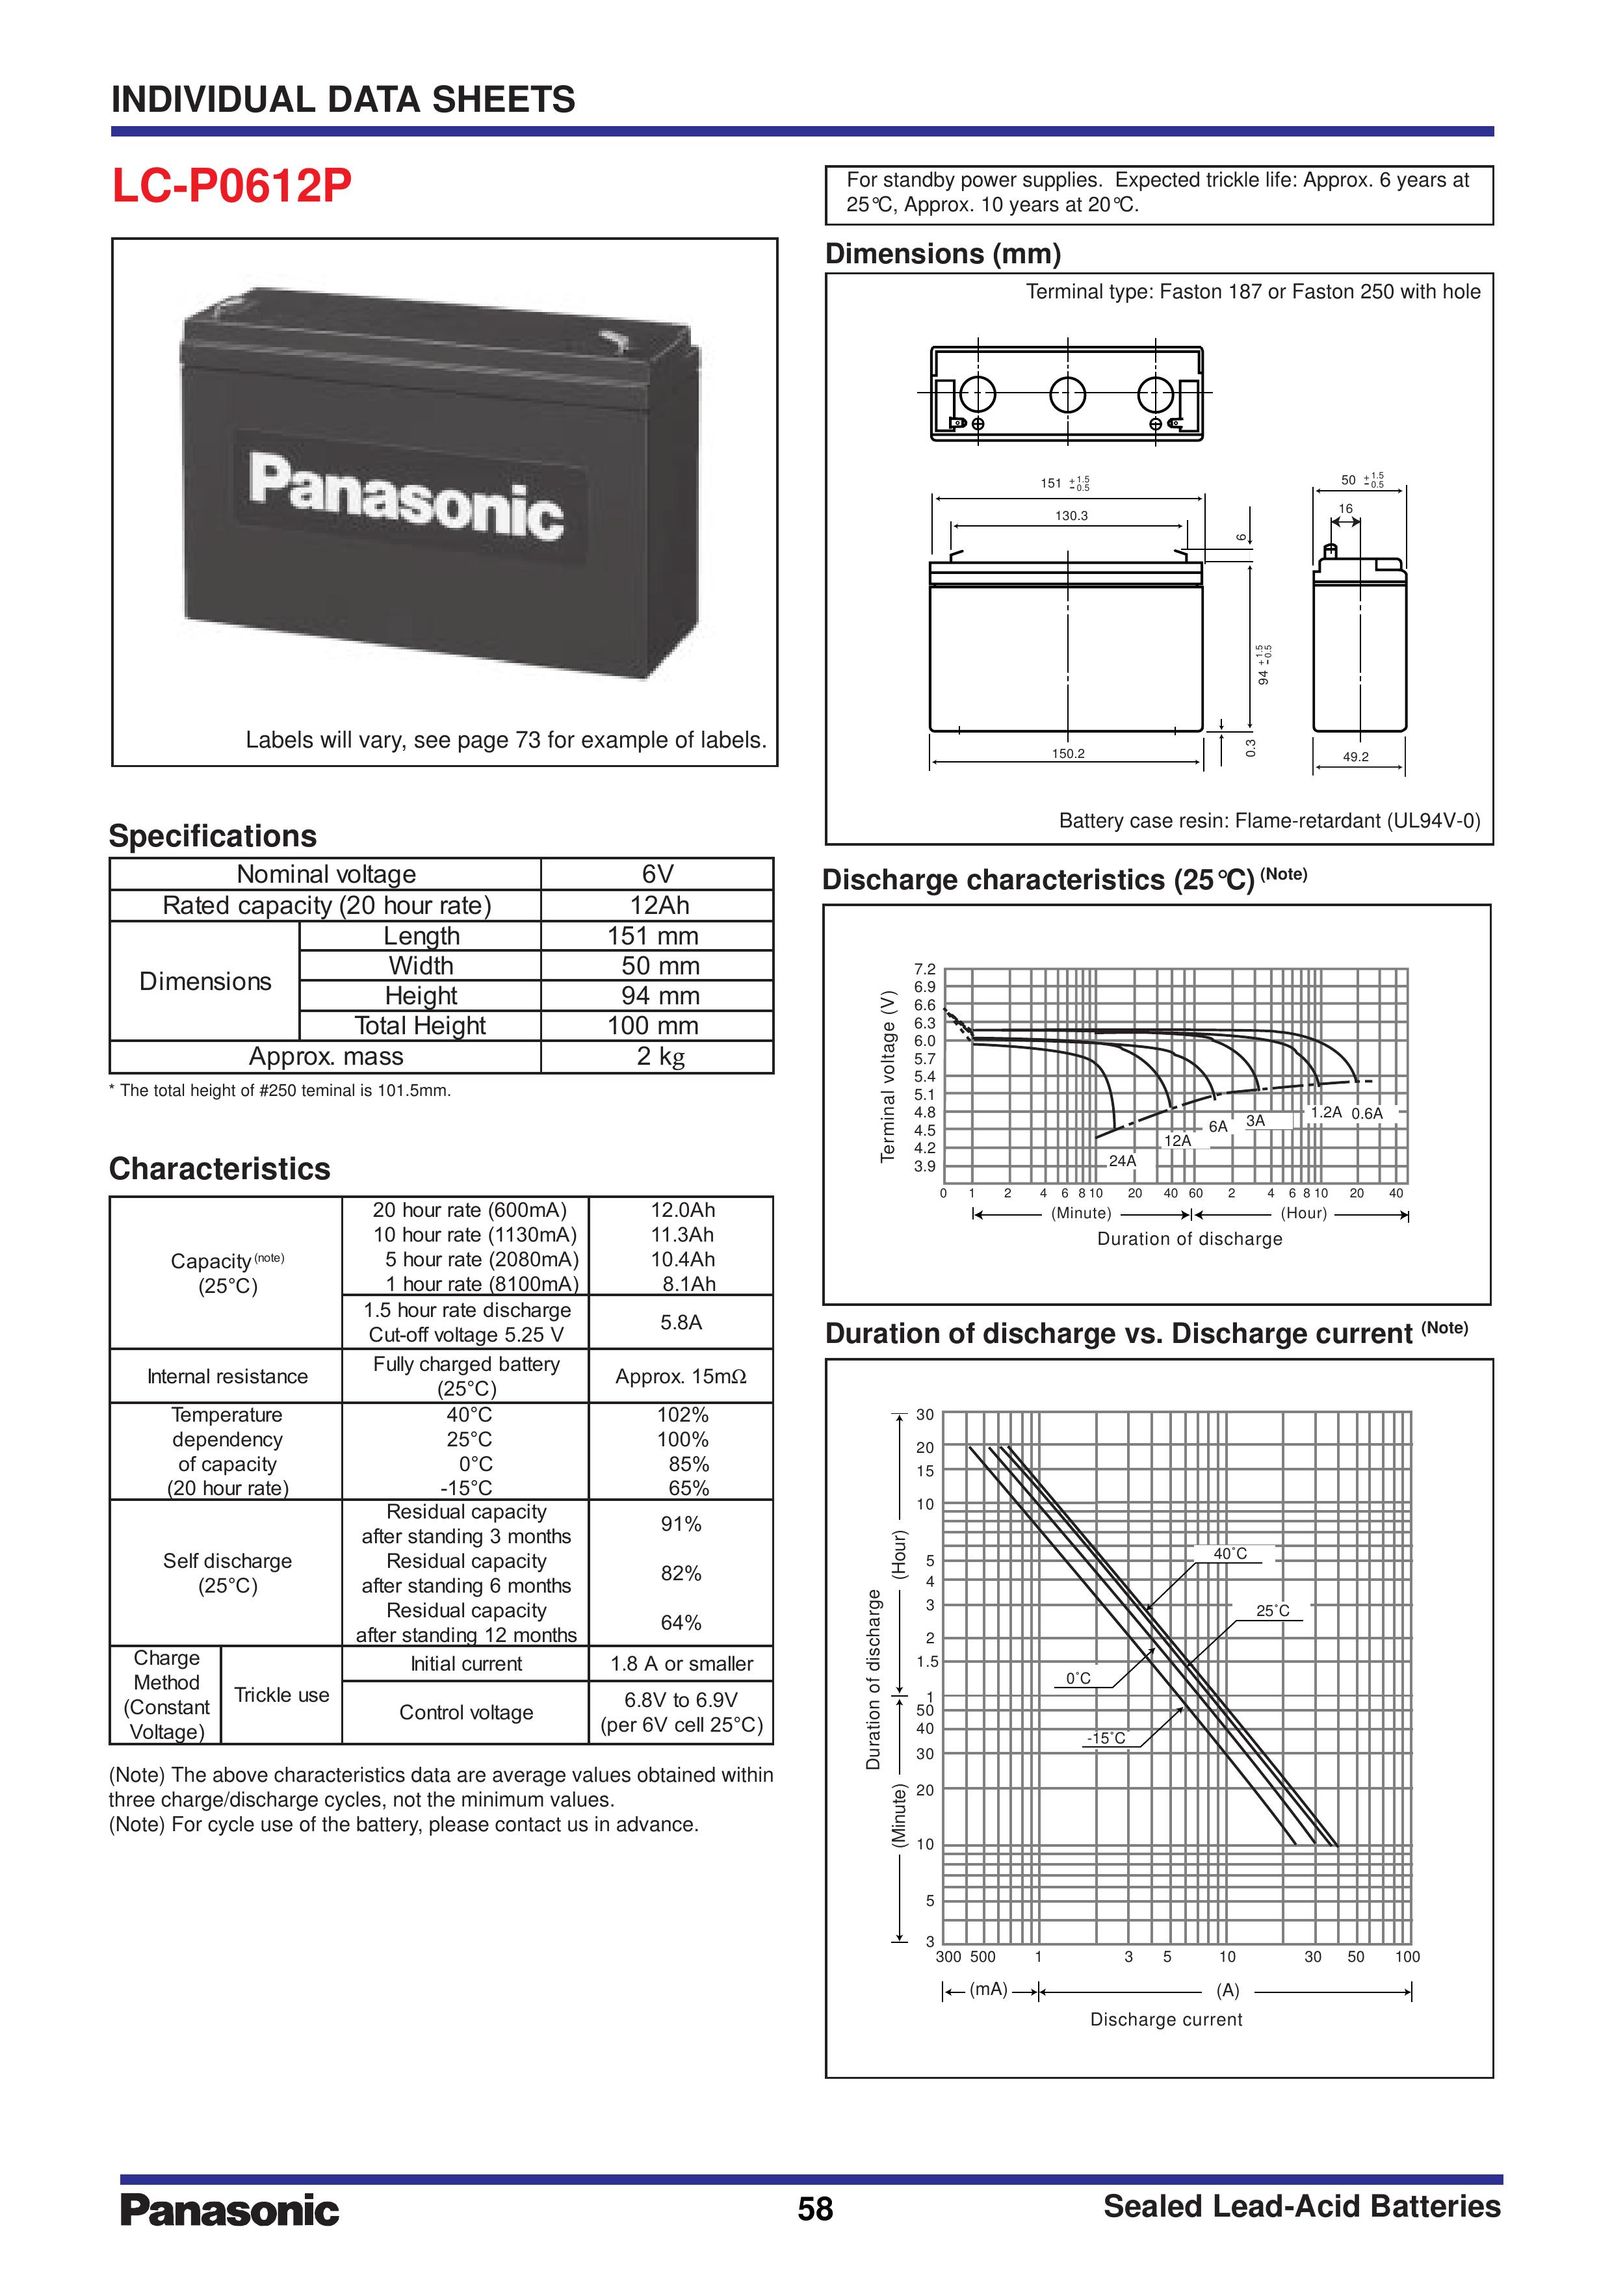 Panasonic LC-P0612P Power Supply User Manual